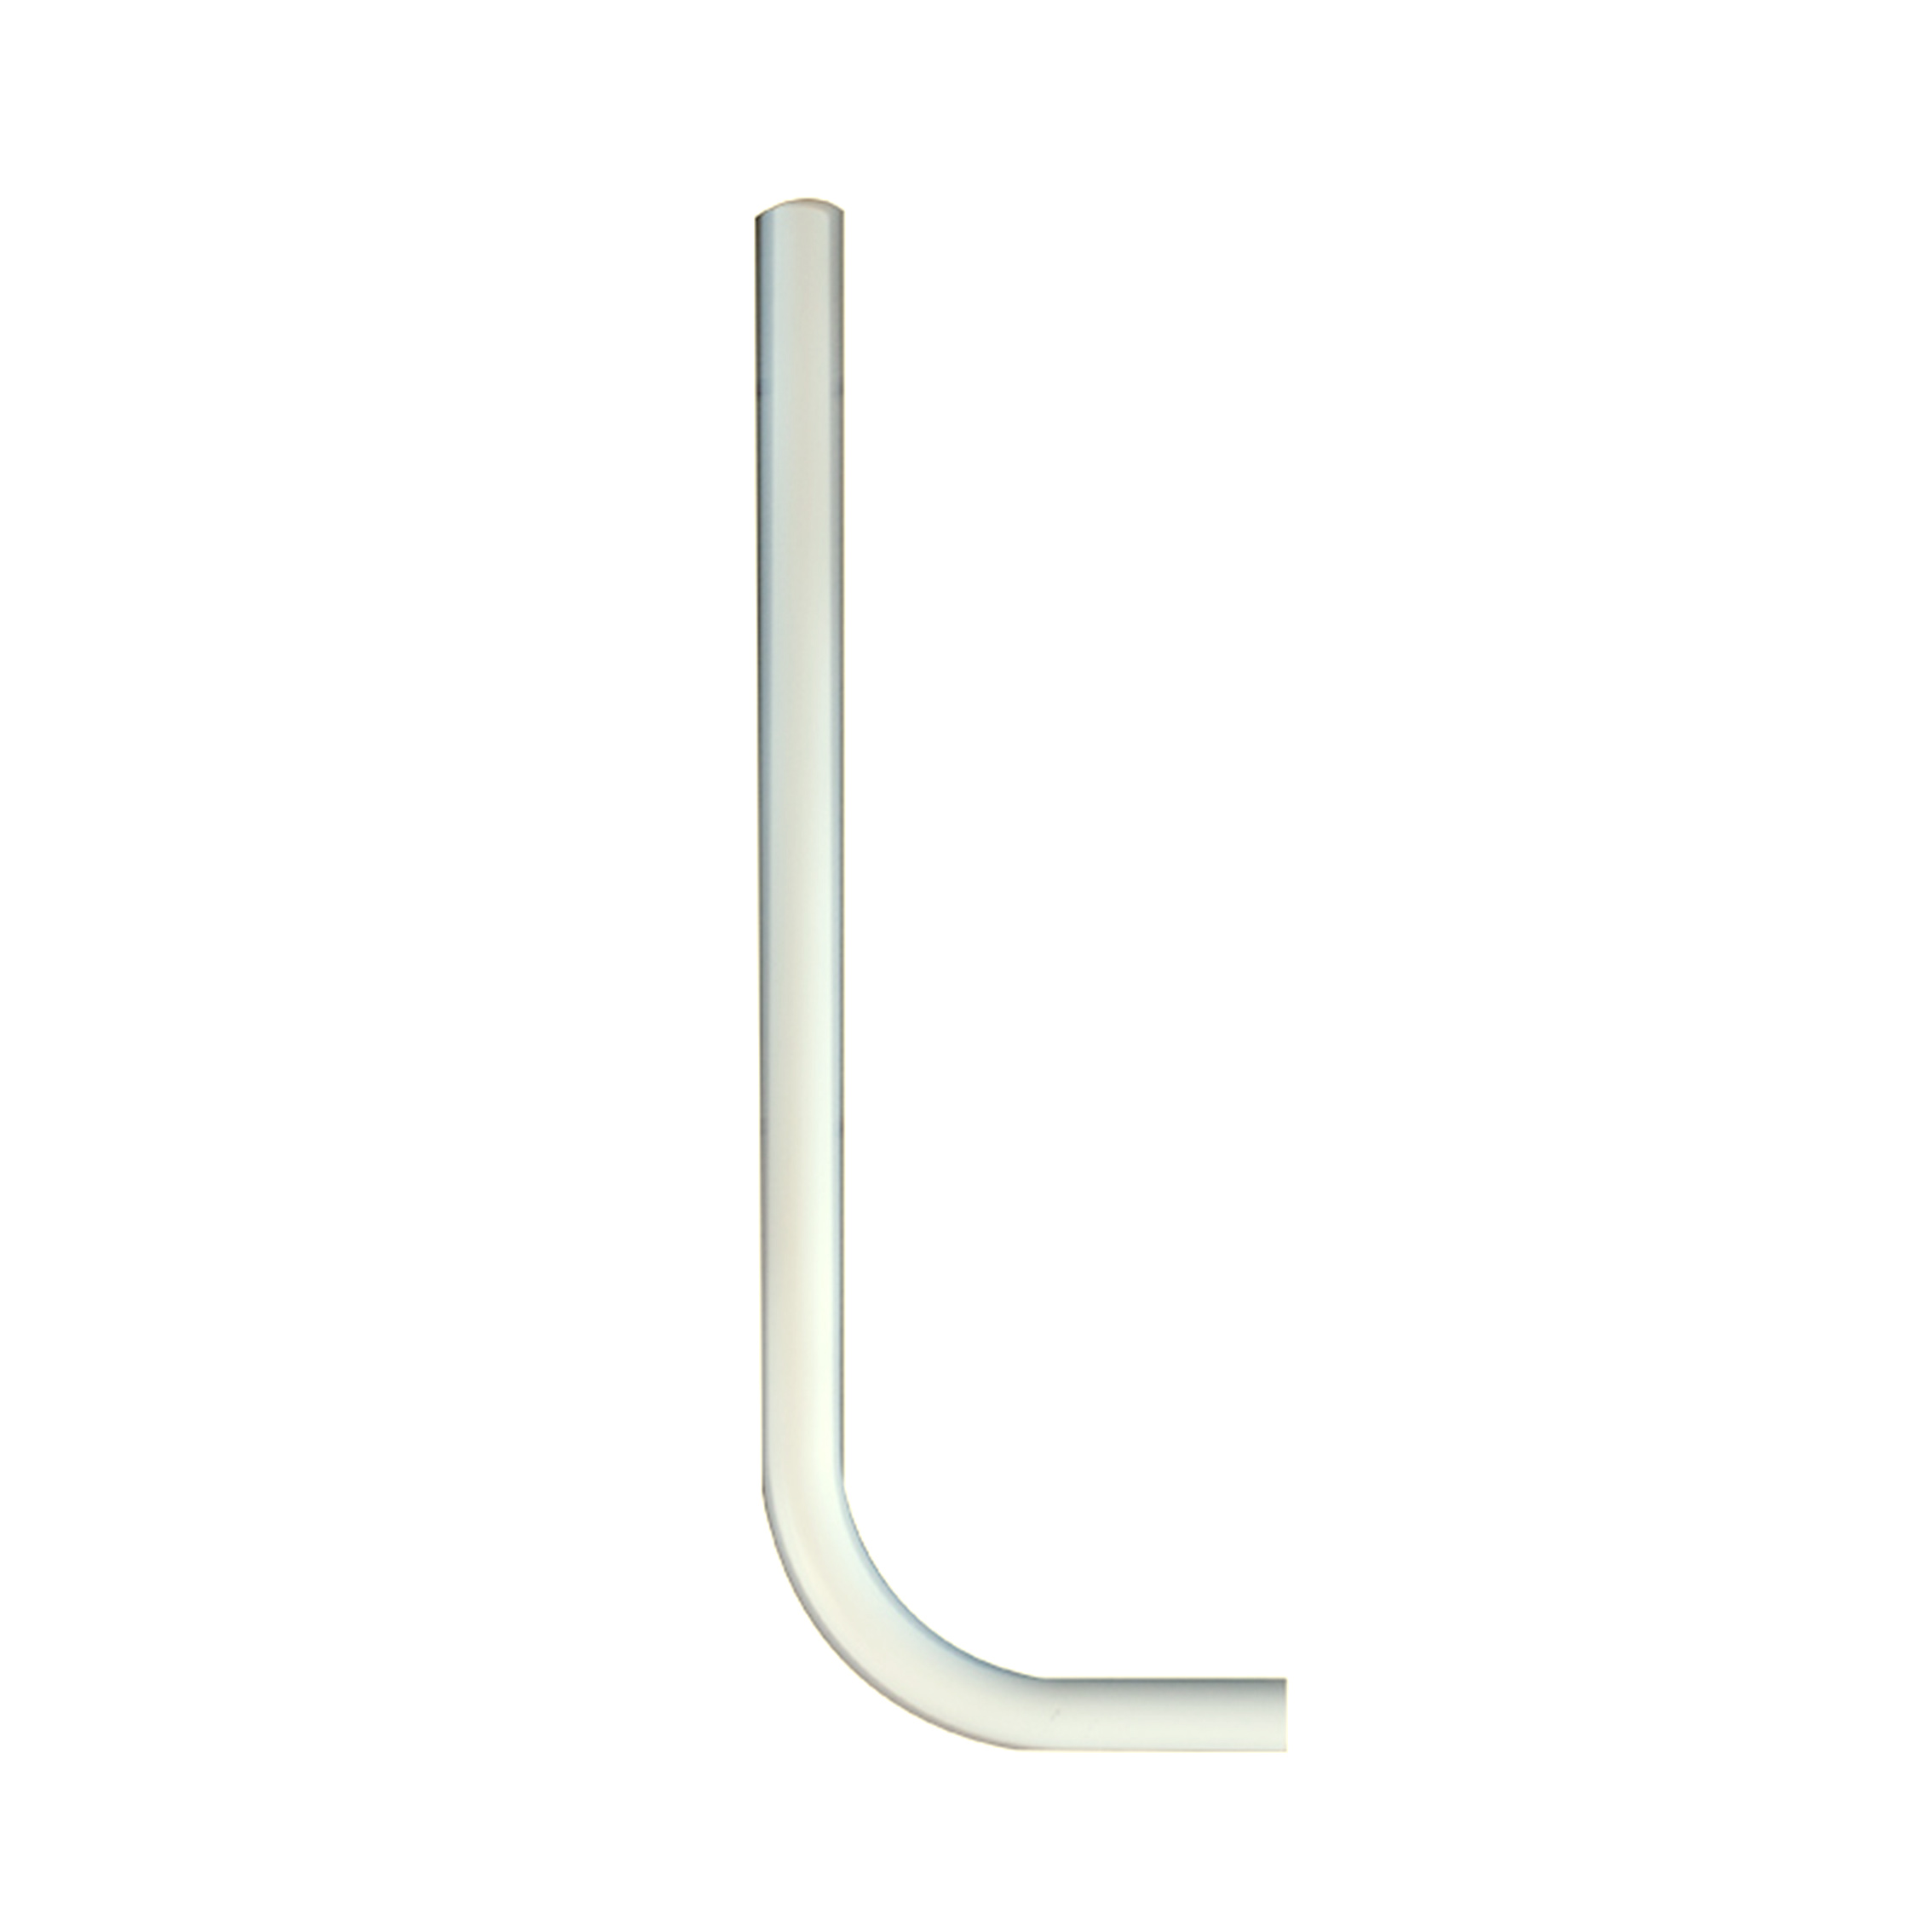 Ø32 mm (white) plastic waste pipe, short